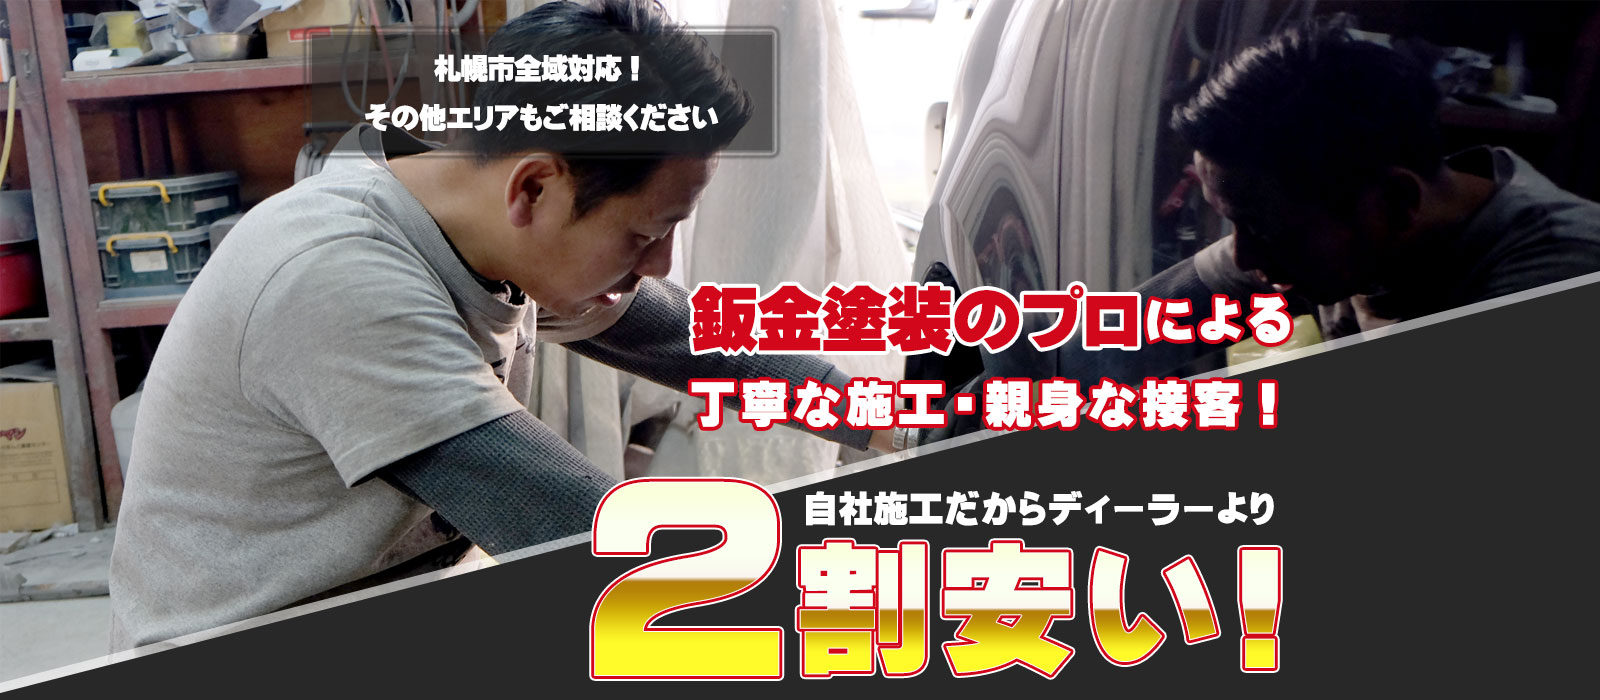 Cars Pro カーズプロ 北海道札幌市 自動車鈑金 塗装専門店